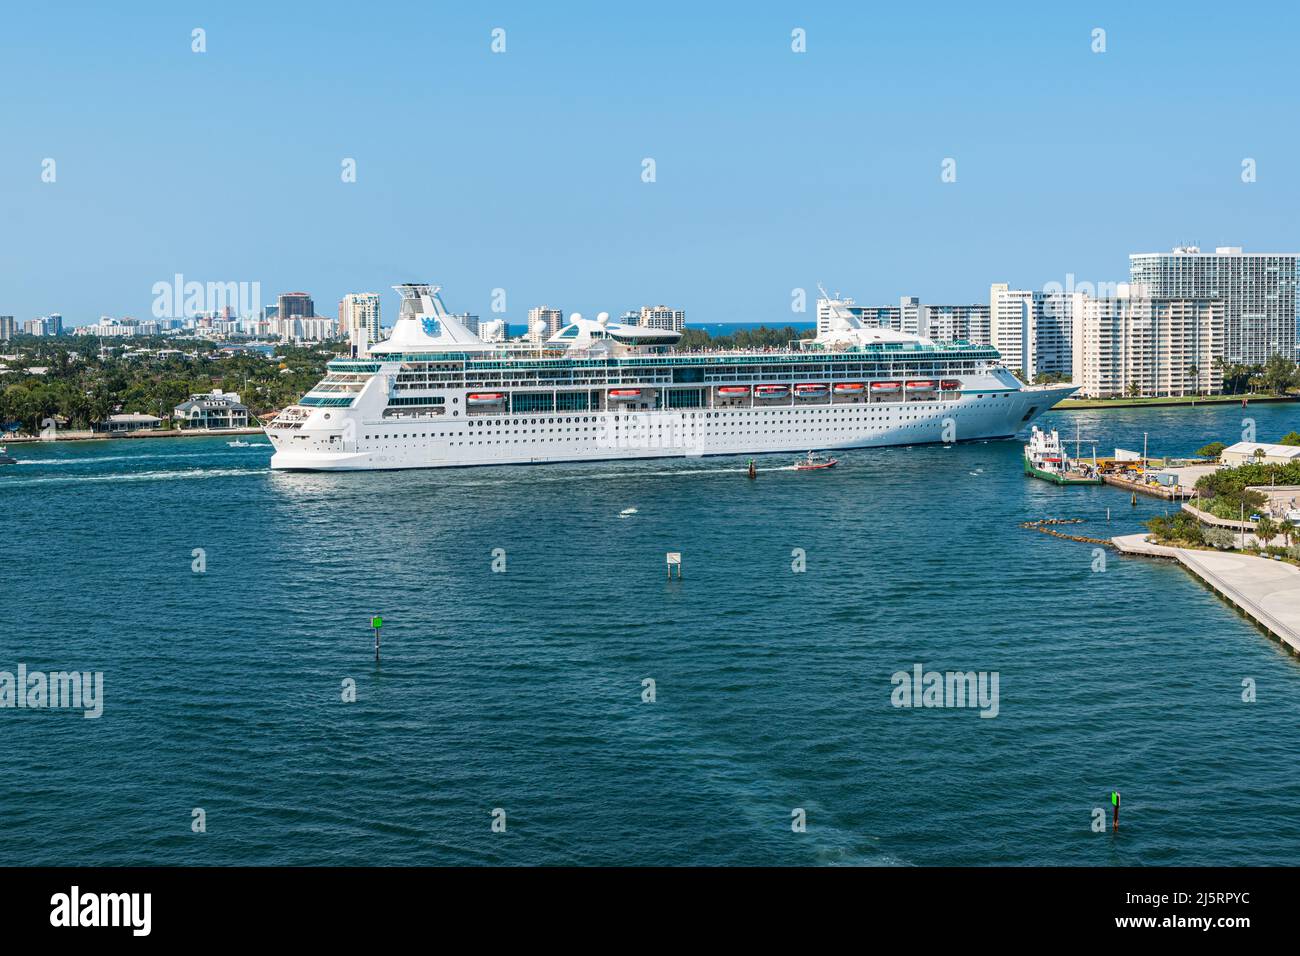 FORT LAUDERDALE, FLORIDA - 28. MÄRZ 2022: Das Kreuzschiff Royal Caribbean Vision of the Seas segelt vom Hafen Everglades in Ft Lauderdale, Florida. Stockfoto